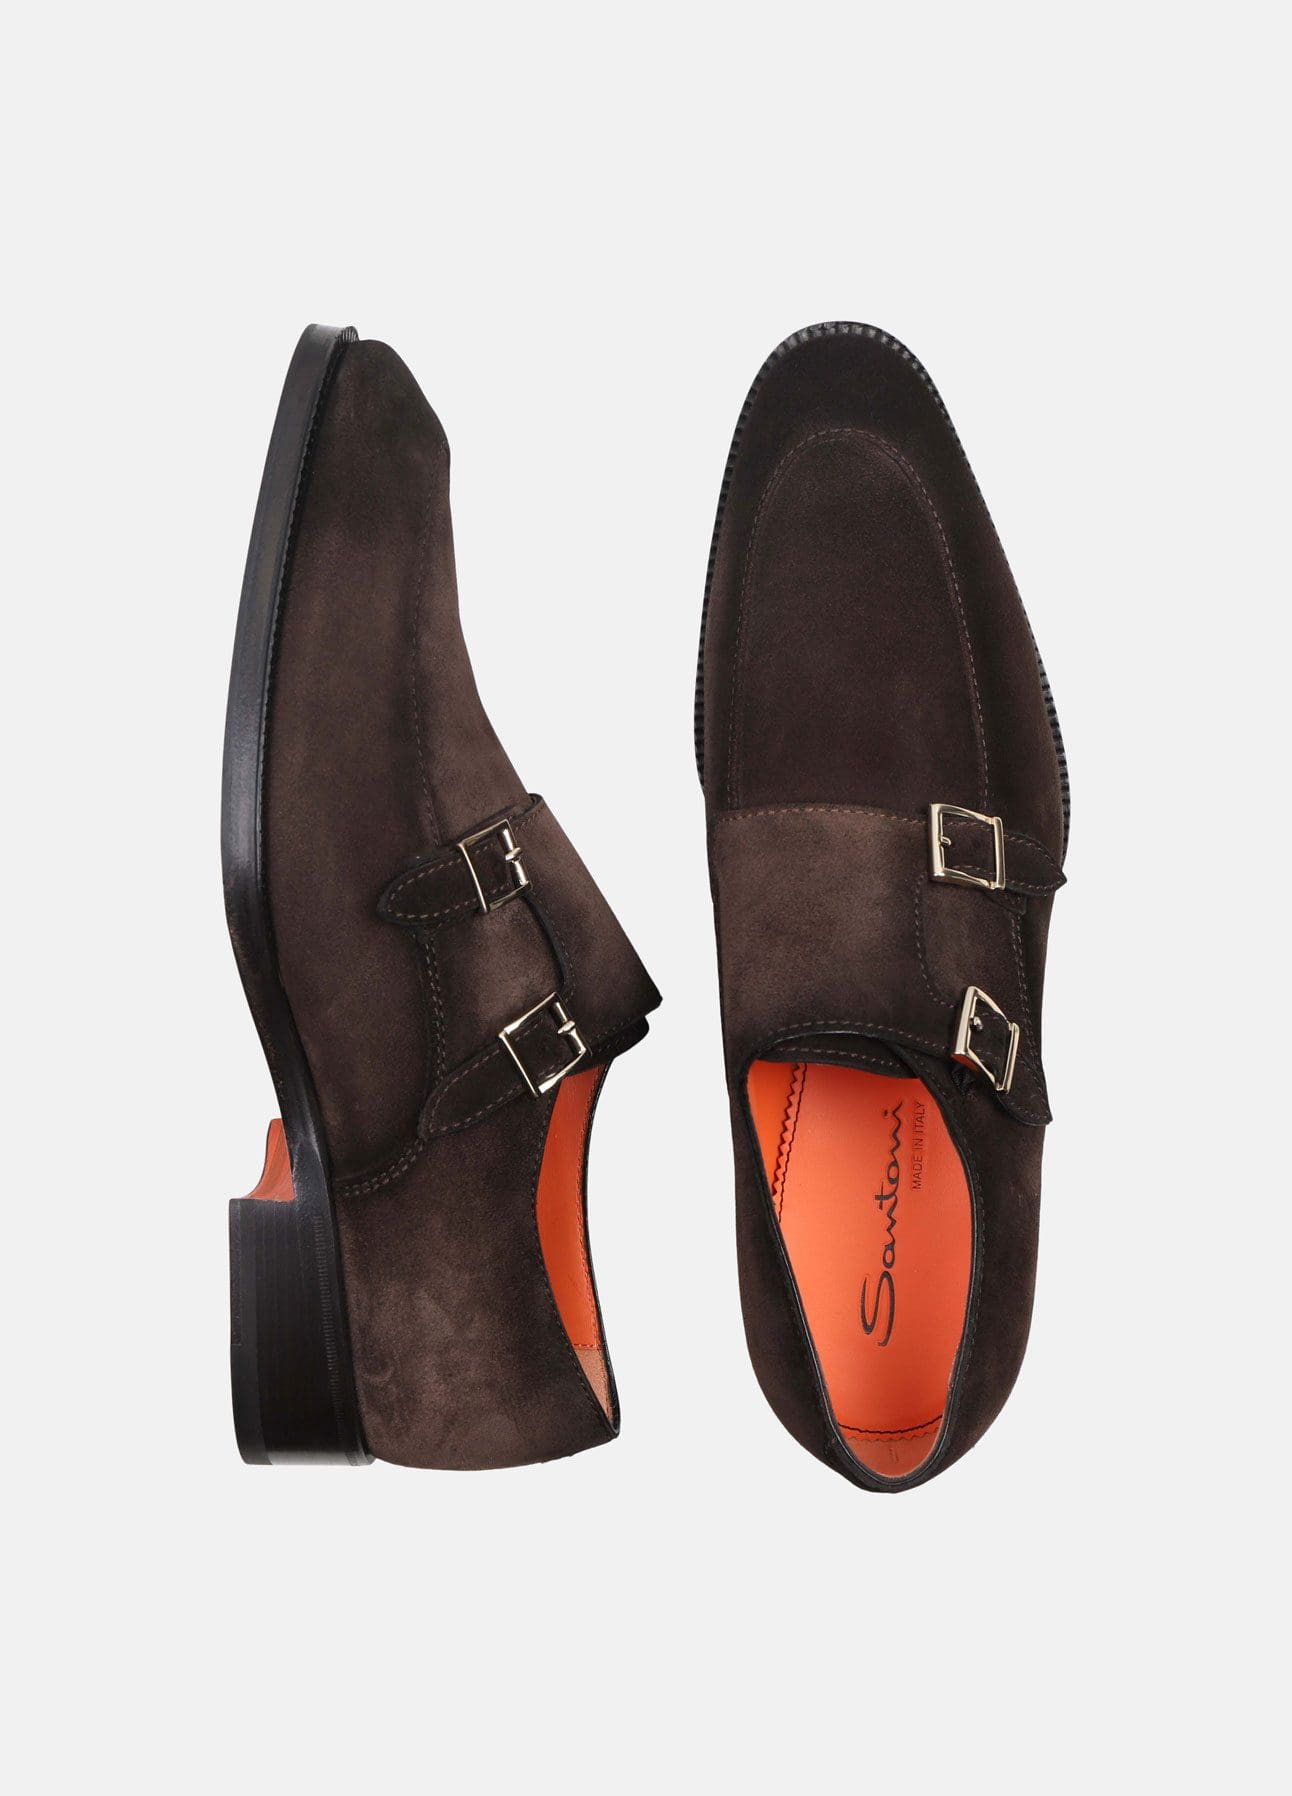 Double monk sko fra Santoni Shop online hos troelstrup.com